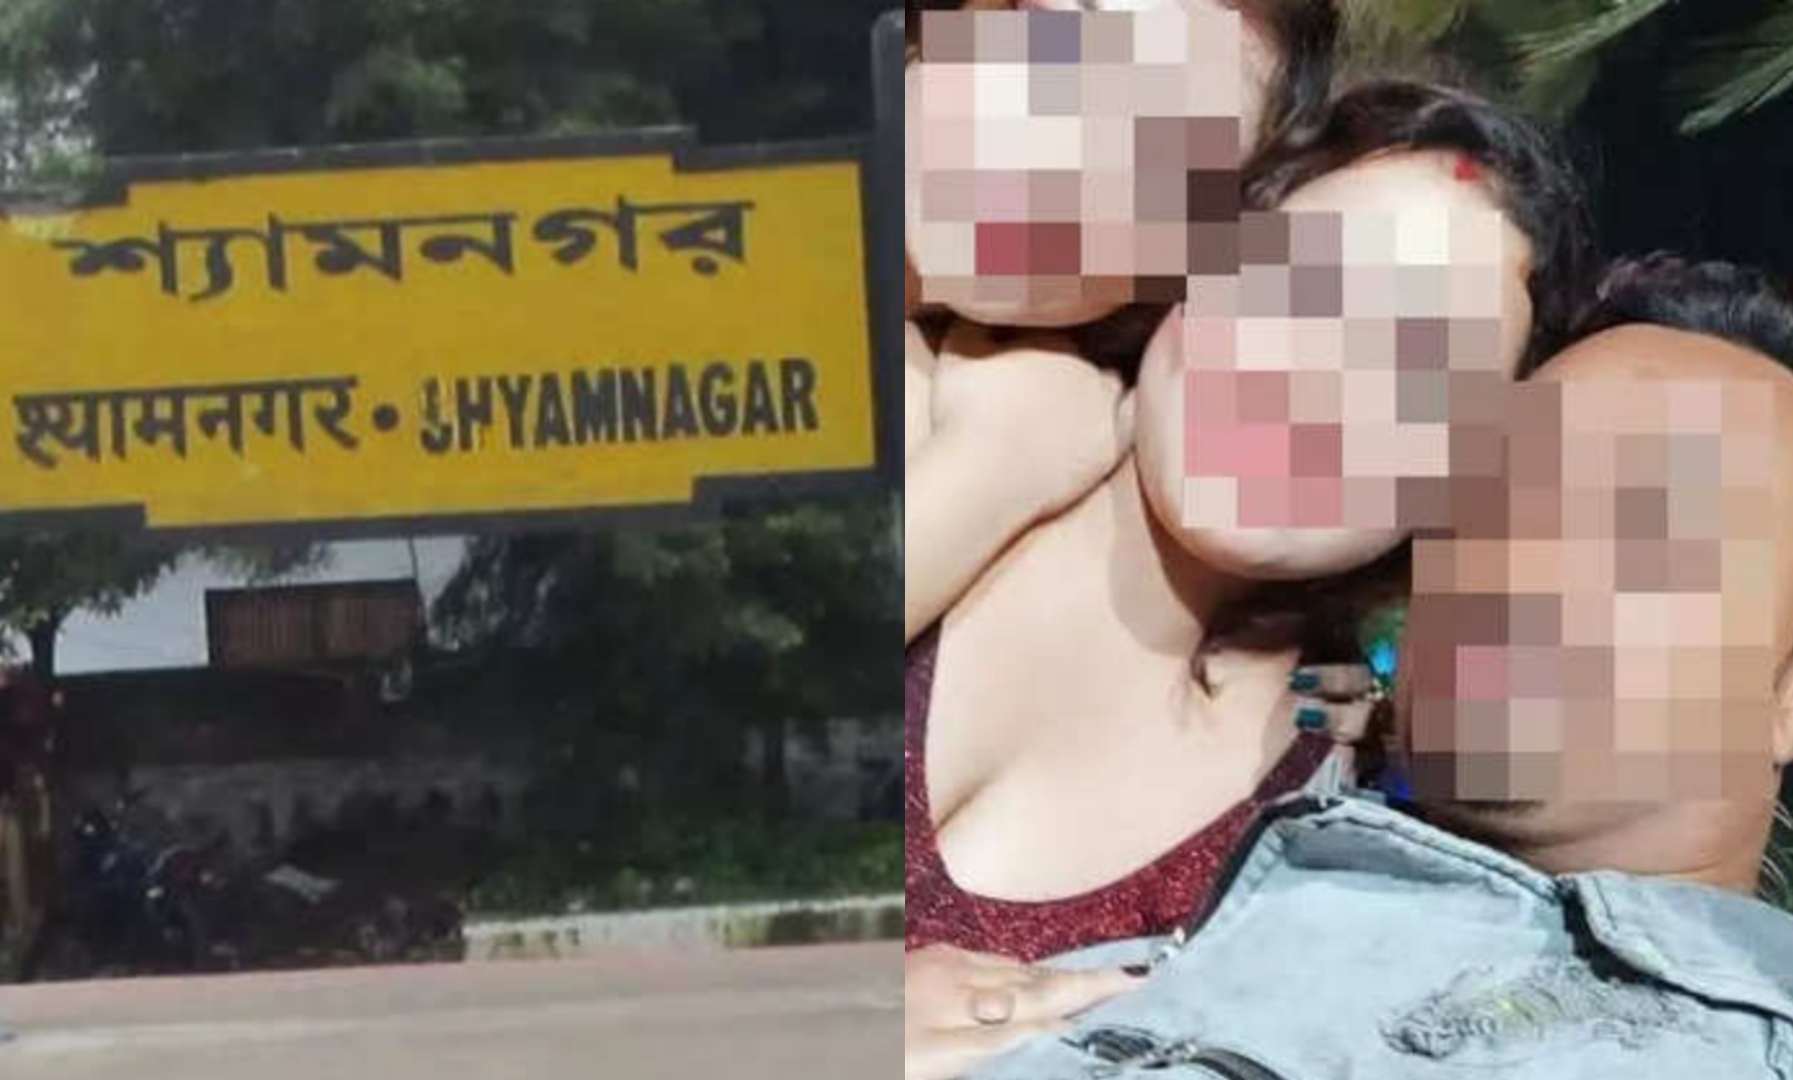 Shyamnagar